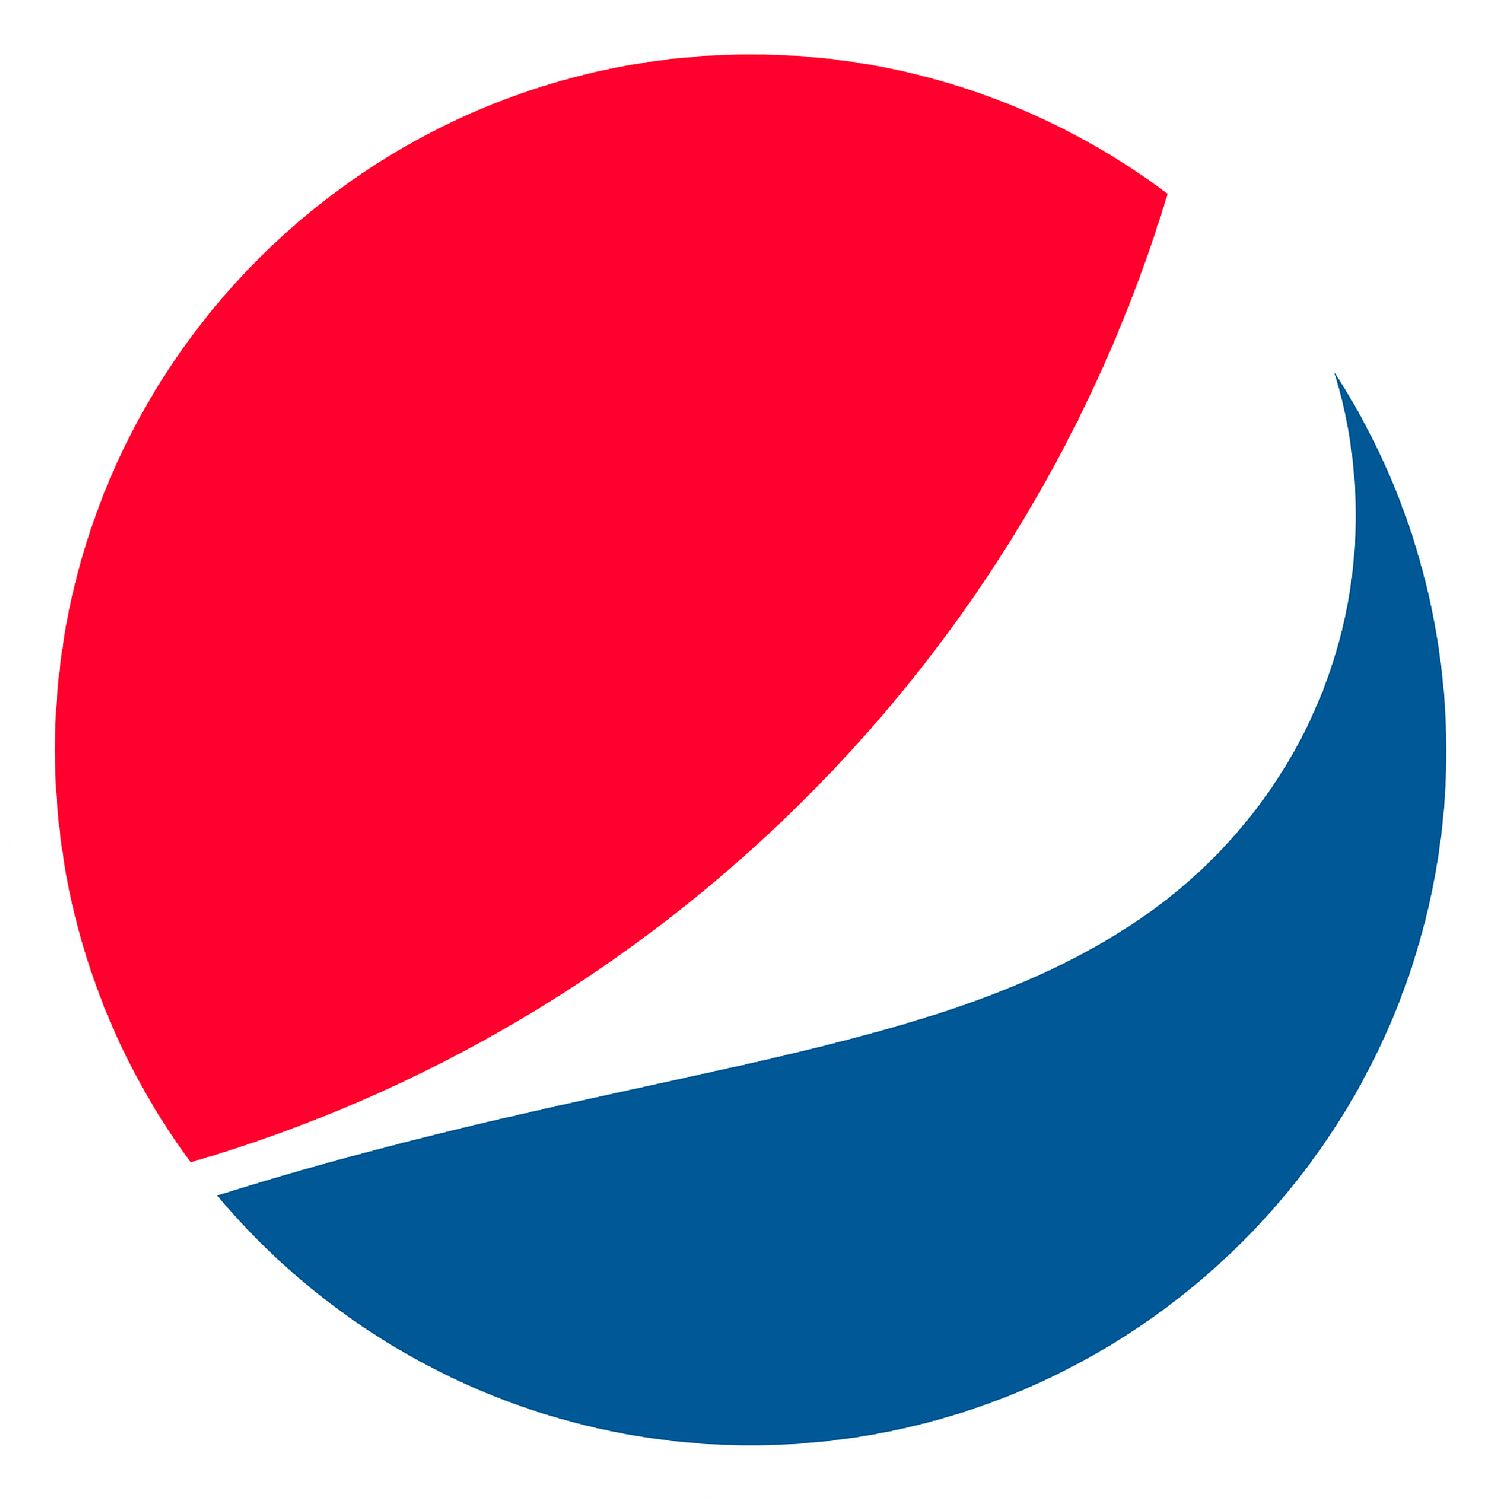 The Pepsi logomark is an abstract logomark